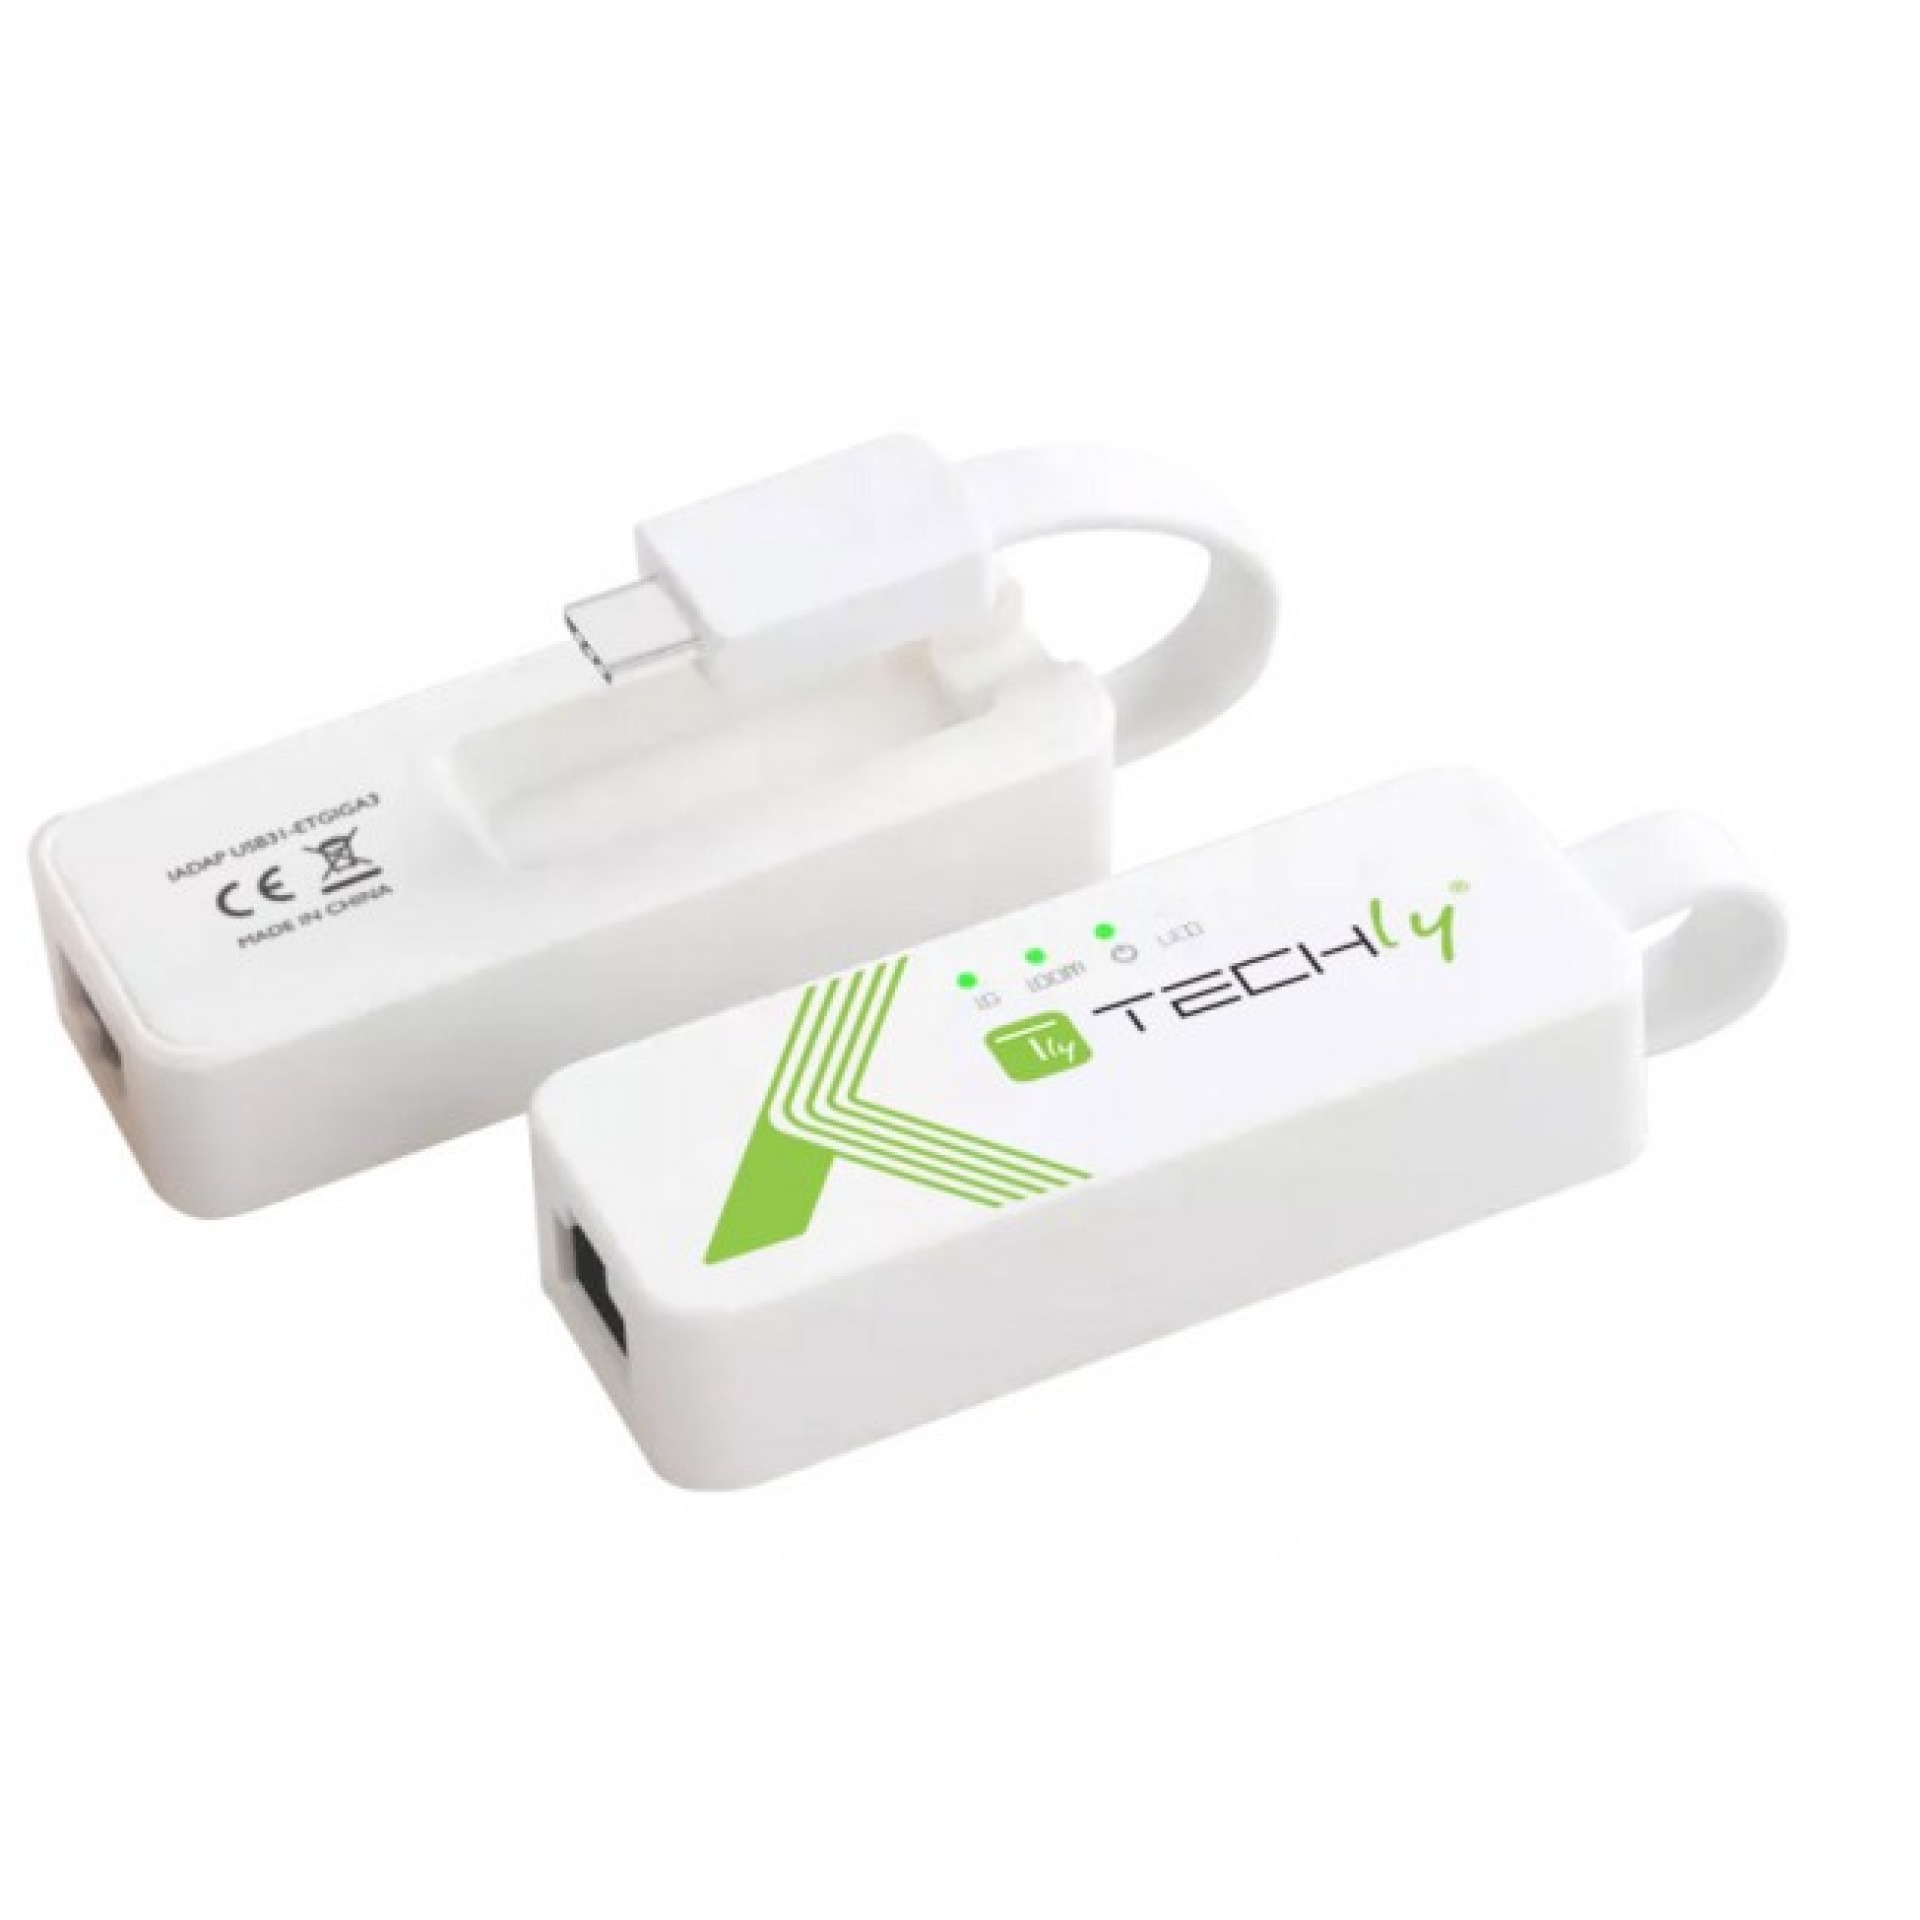 USB 3.1 Type C RJ45 10/100/1000 Adapter, white